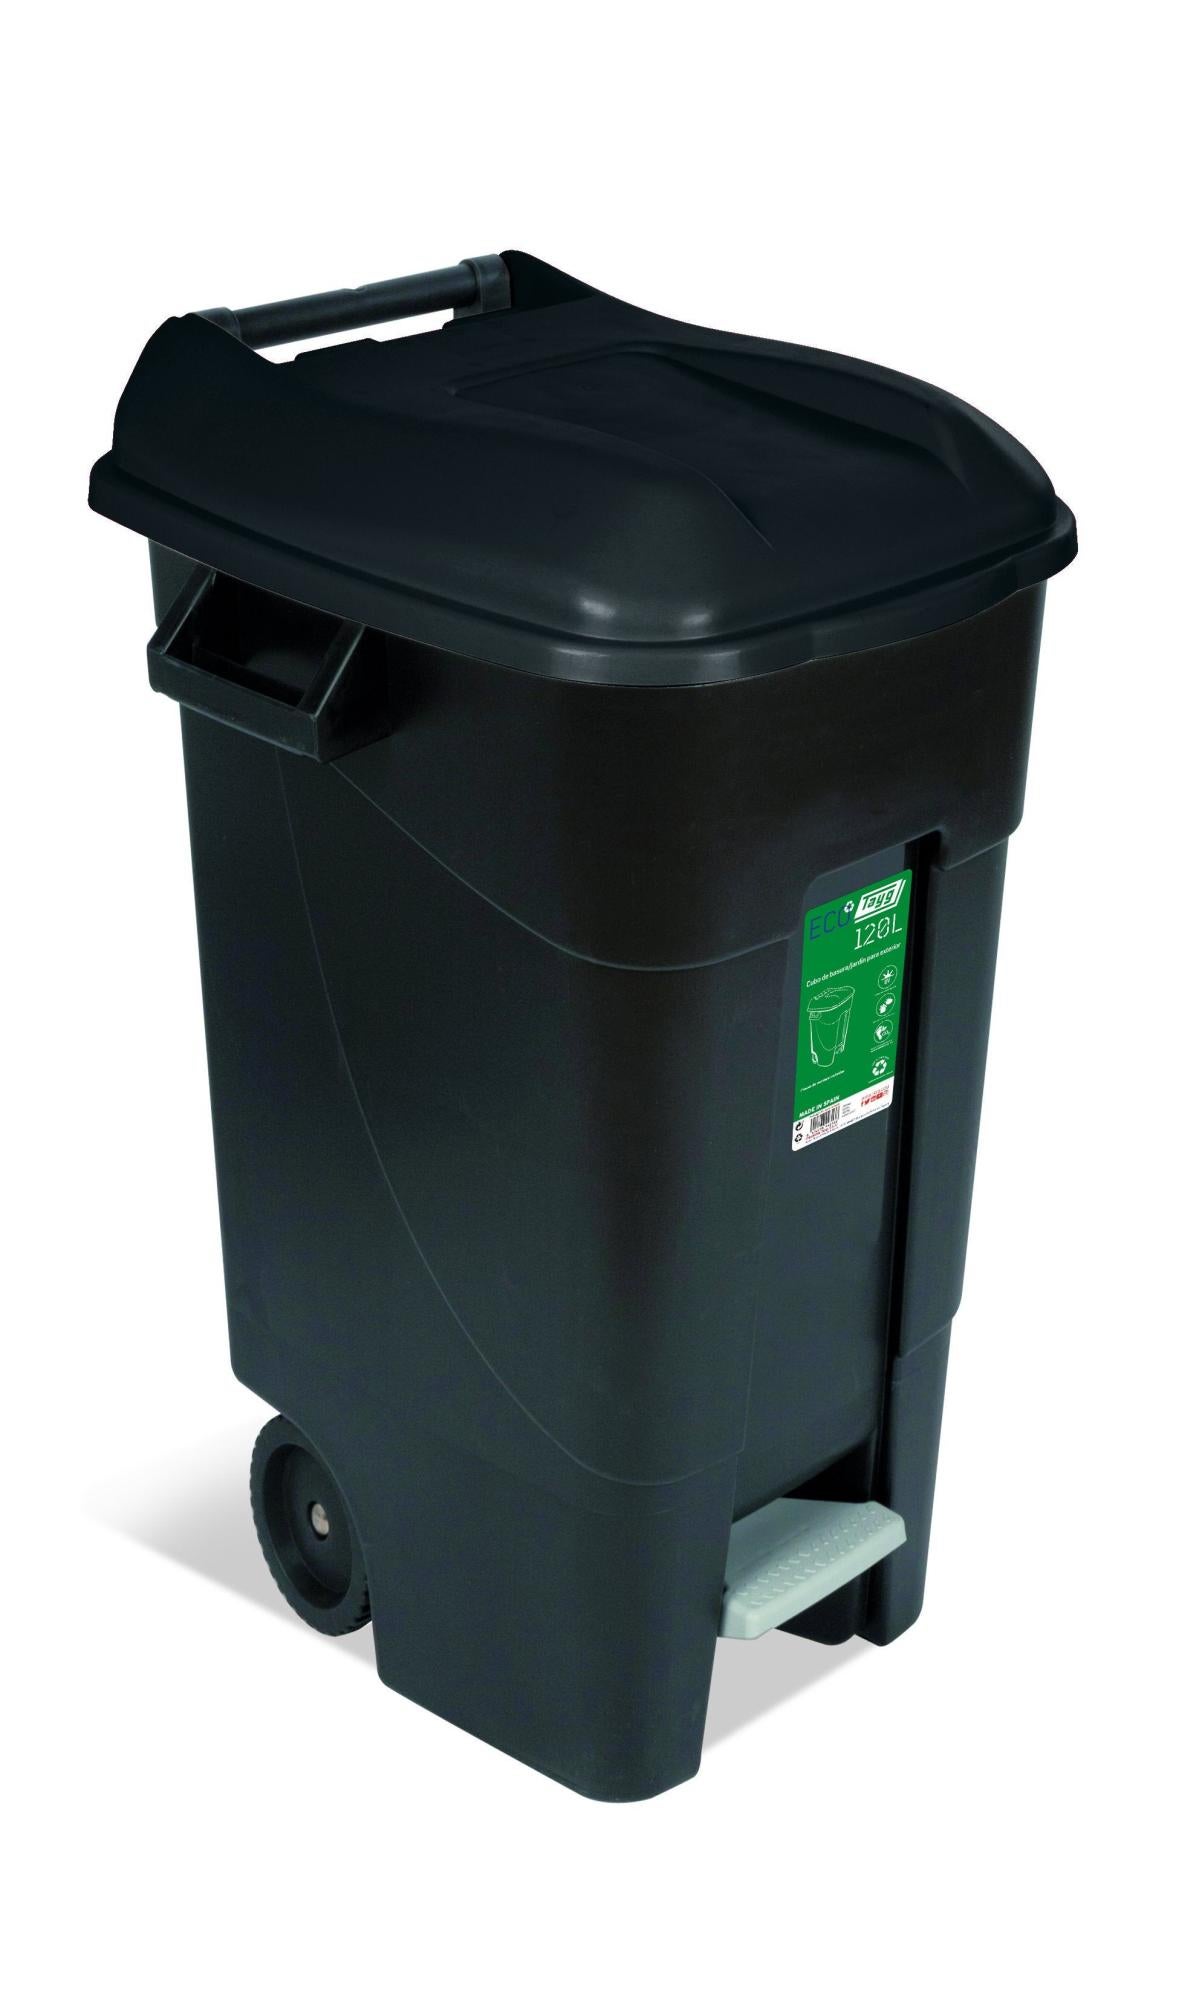 Cubo de basura con pedal de polipropileno negro de 120l ecotayg